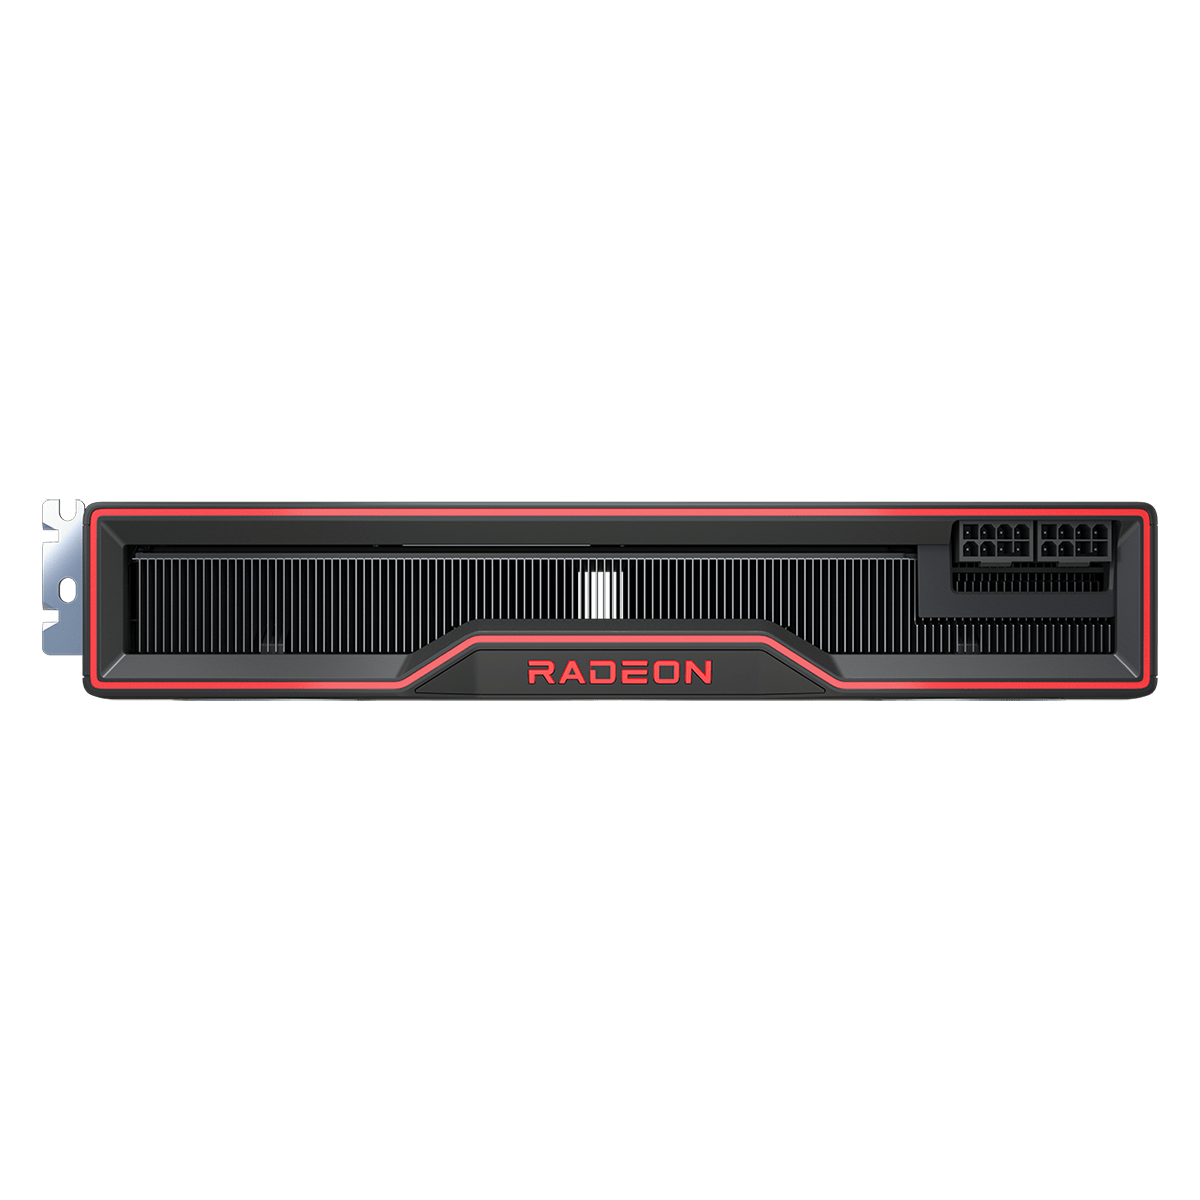 Placa de Vídeo ASRock Radeon RX 6900 XT, 16GB, GDDR6, FSR, Ray Tracing, 90-GA2HZZ-00UANF